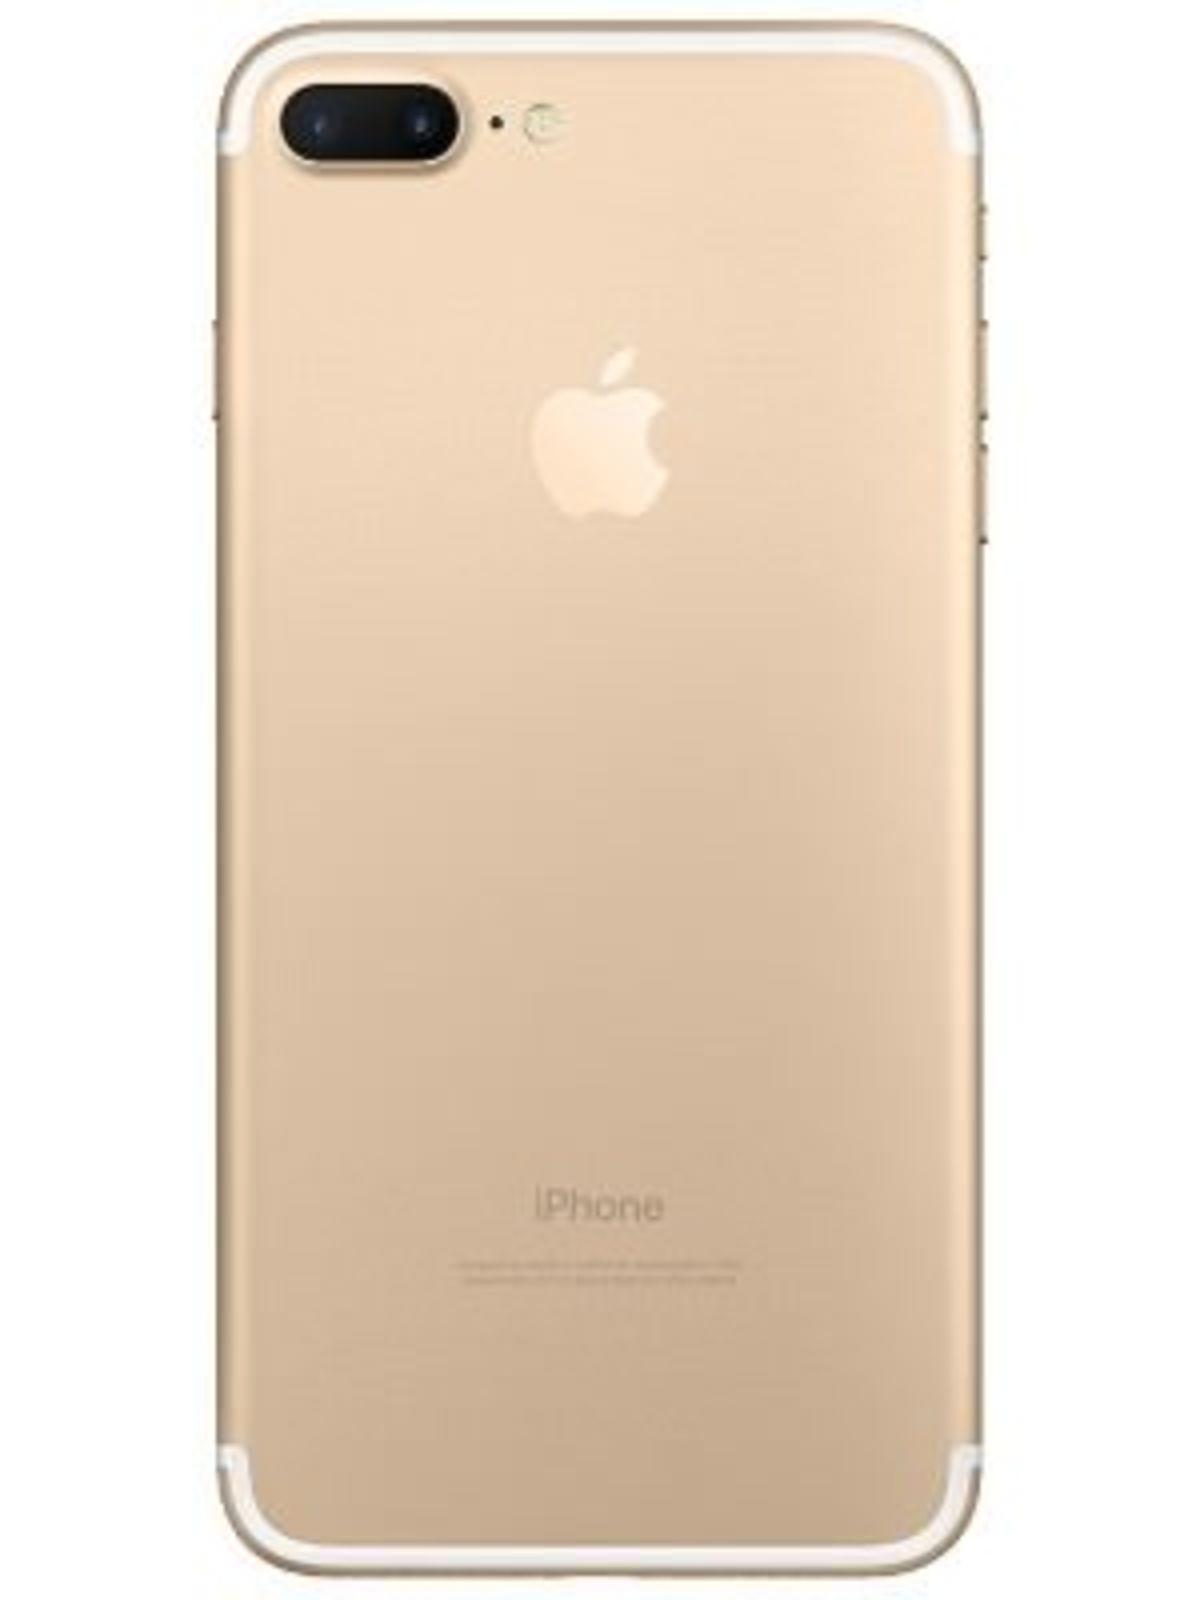 Apple iPhone 7 Plus 256GB Price in India, Full Specifications 